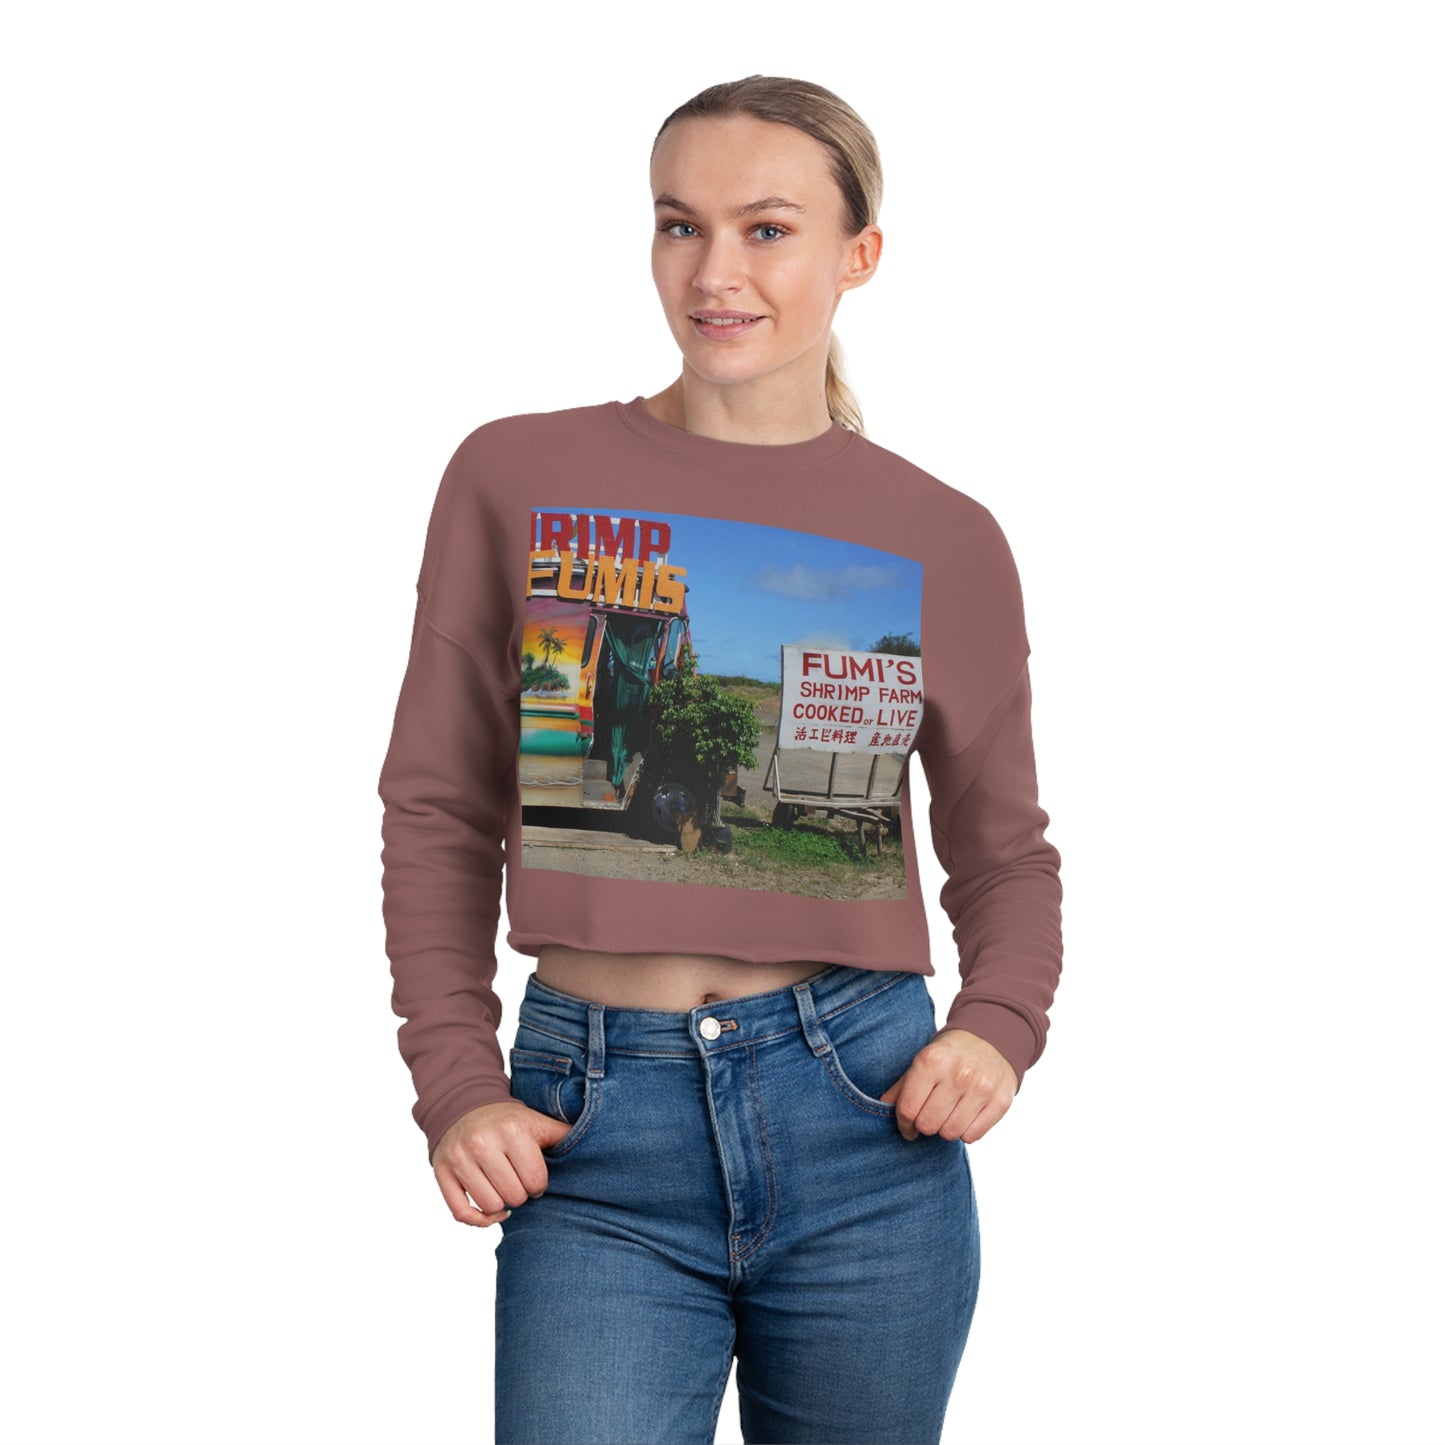 Kaulana Delights - Women's Cropped Sweatshirt - Fry1Productions